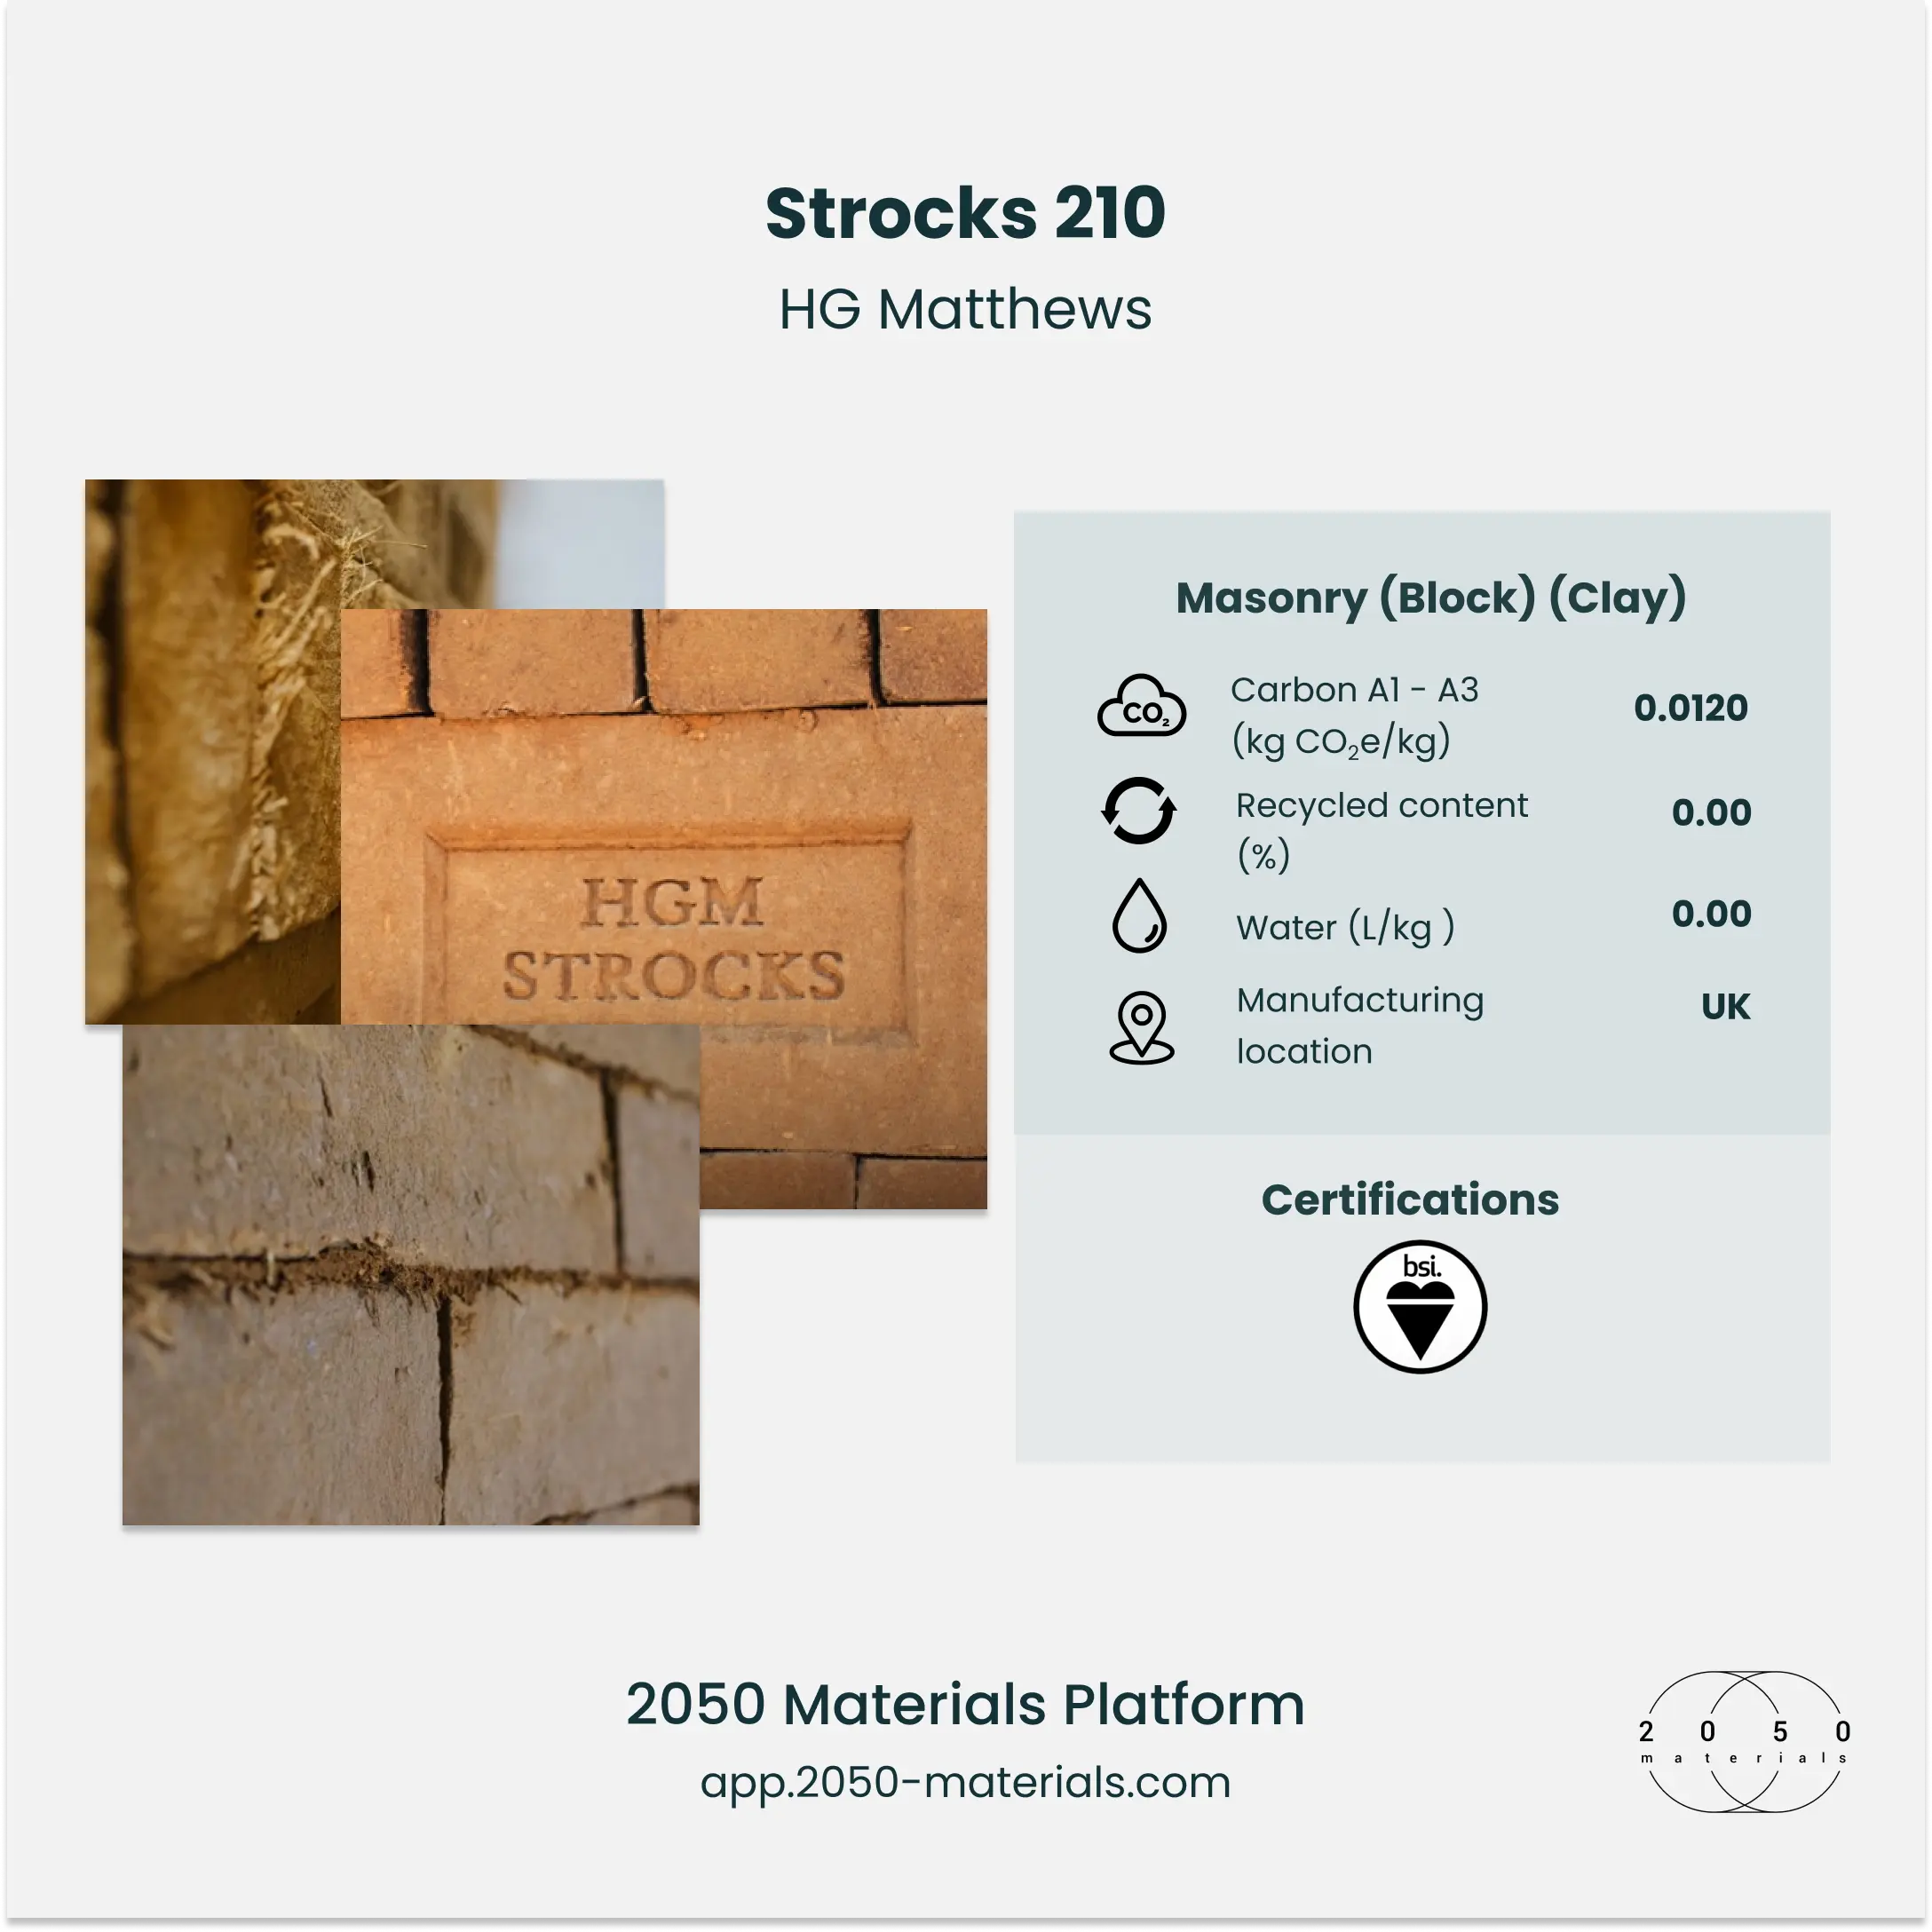 Strocks Material Facts 2050 Materials Platform Image